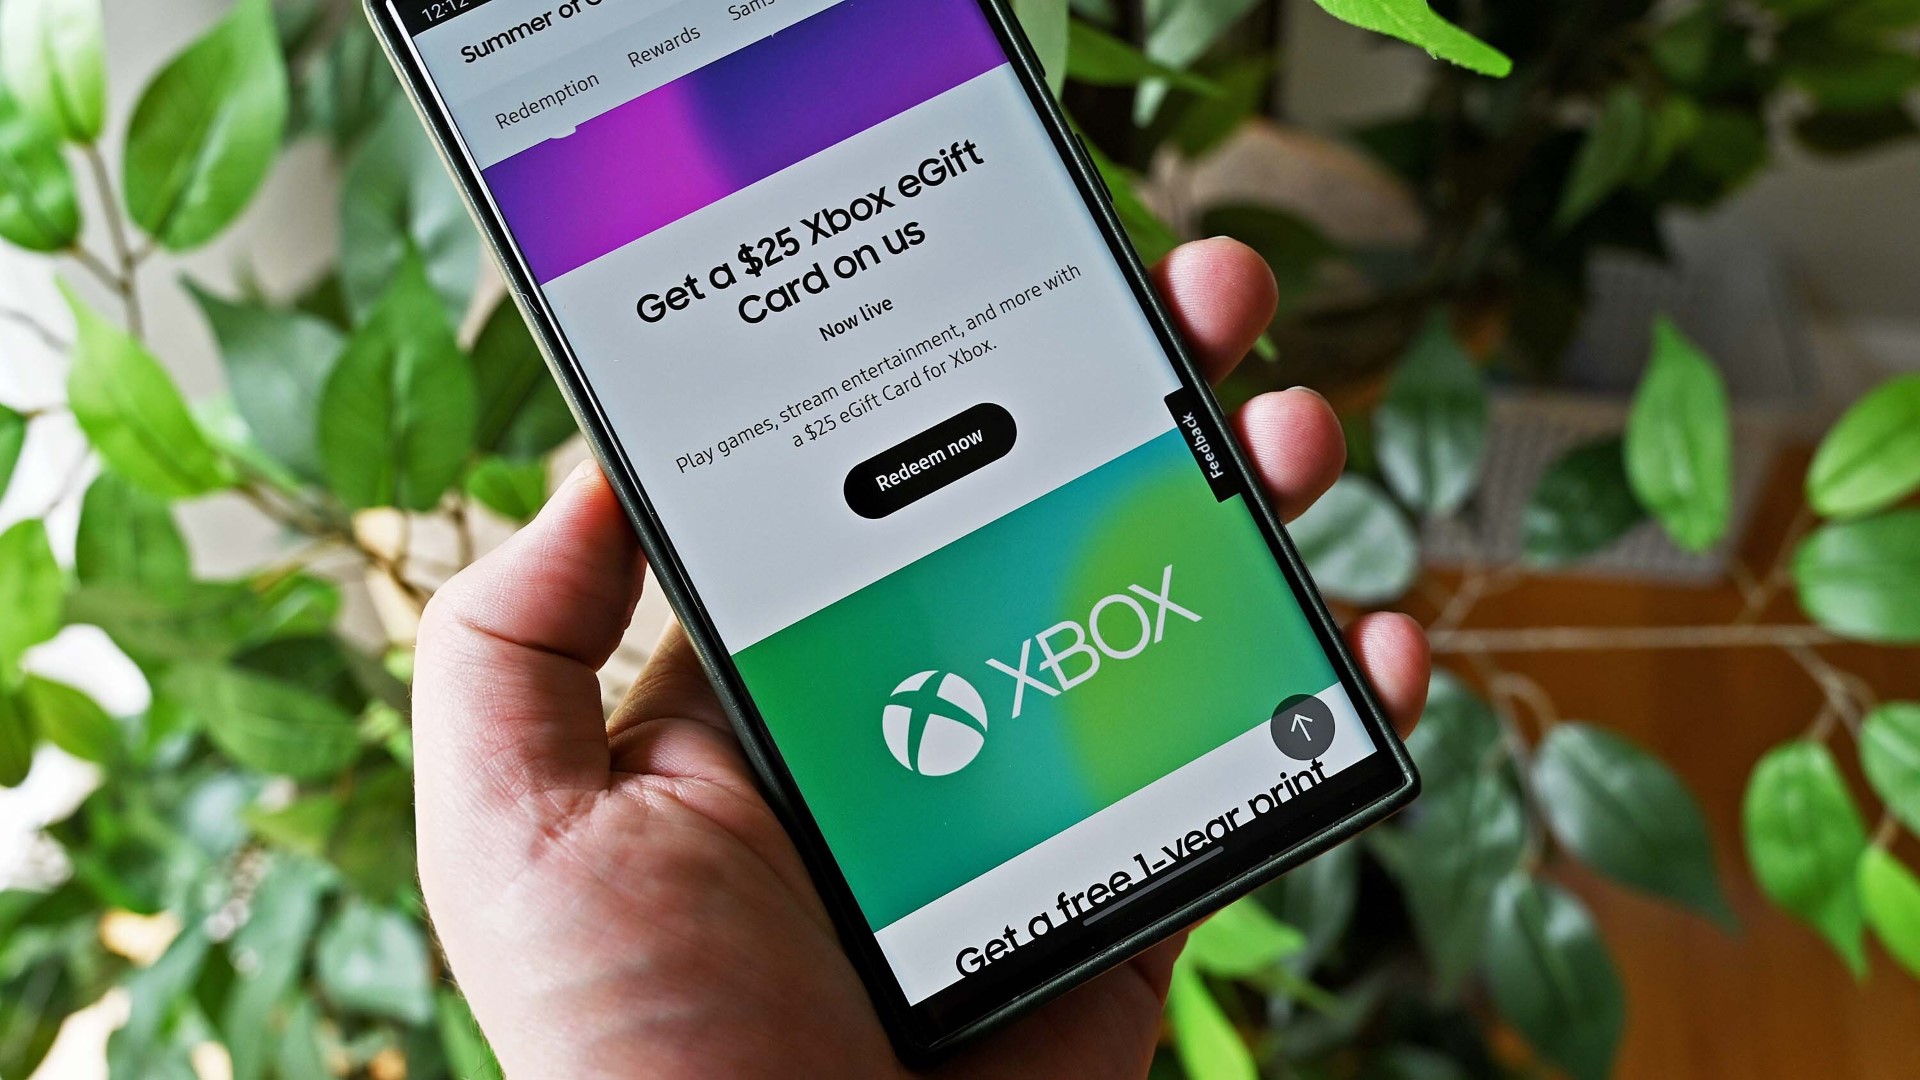 Xbox Gift Card $5 | Xbox One | GameStop